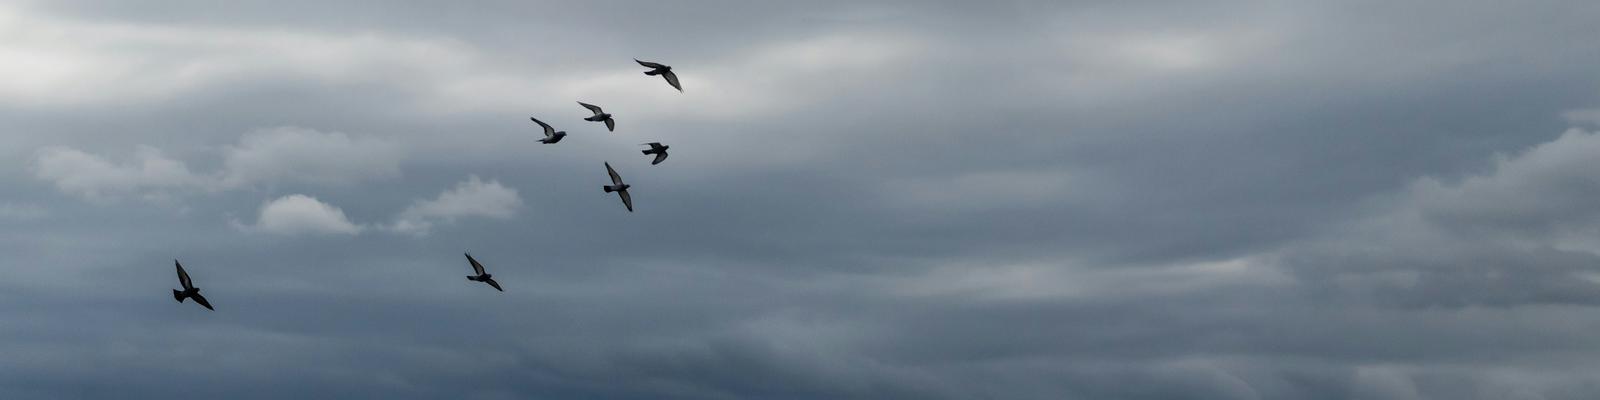 Birds flying on under cloudy sky 